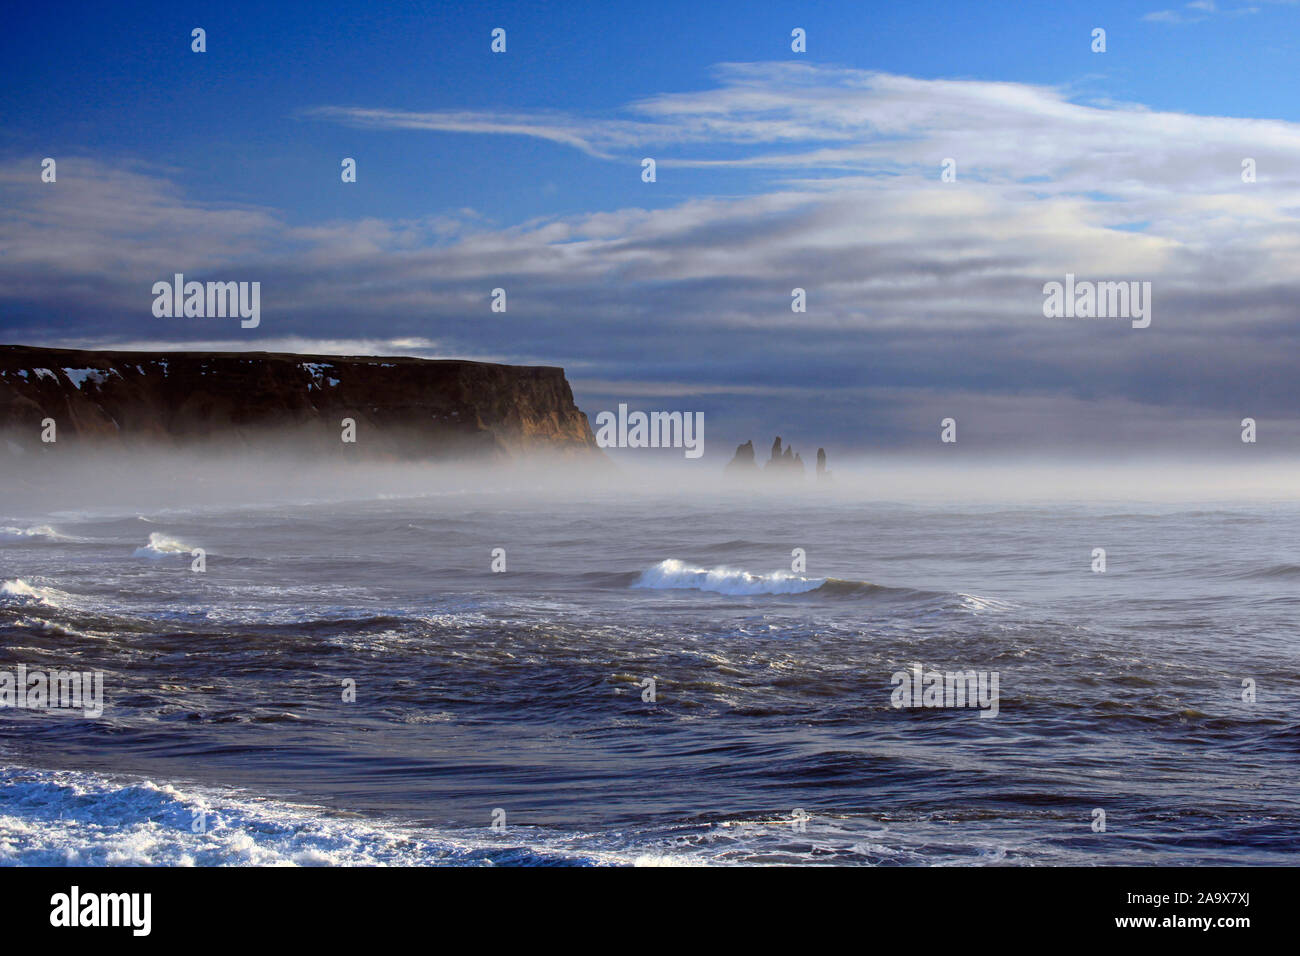 Europa, Isola, Kueste im Nebel, Stimmung Foto Stock